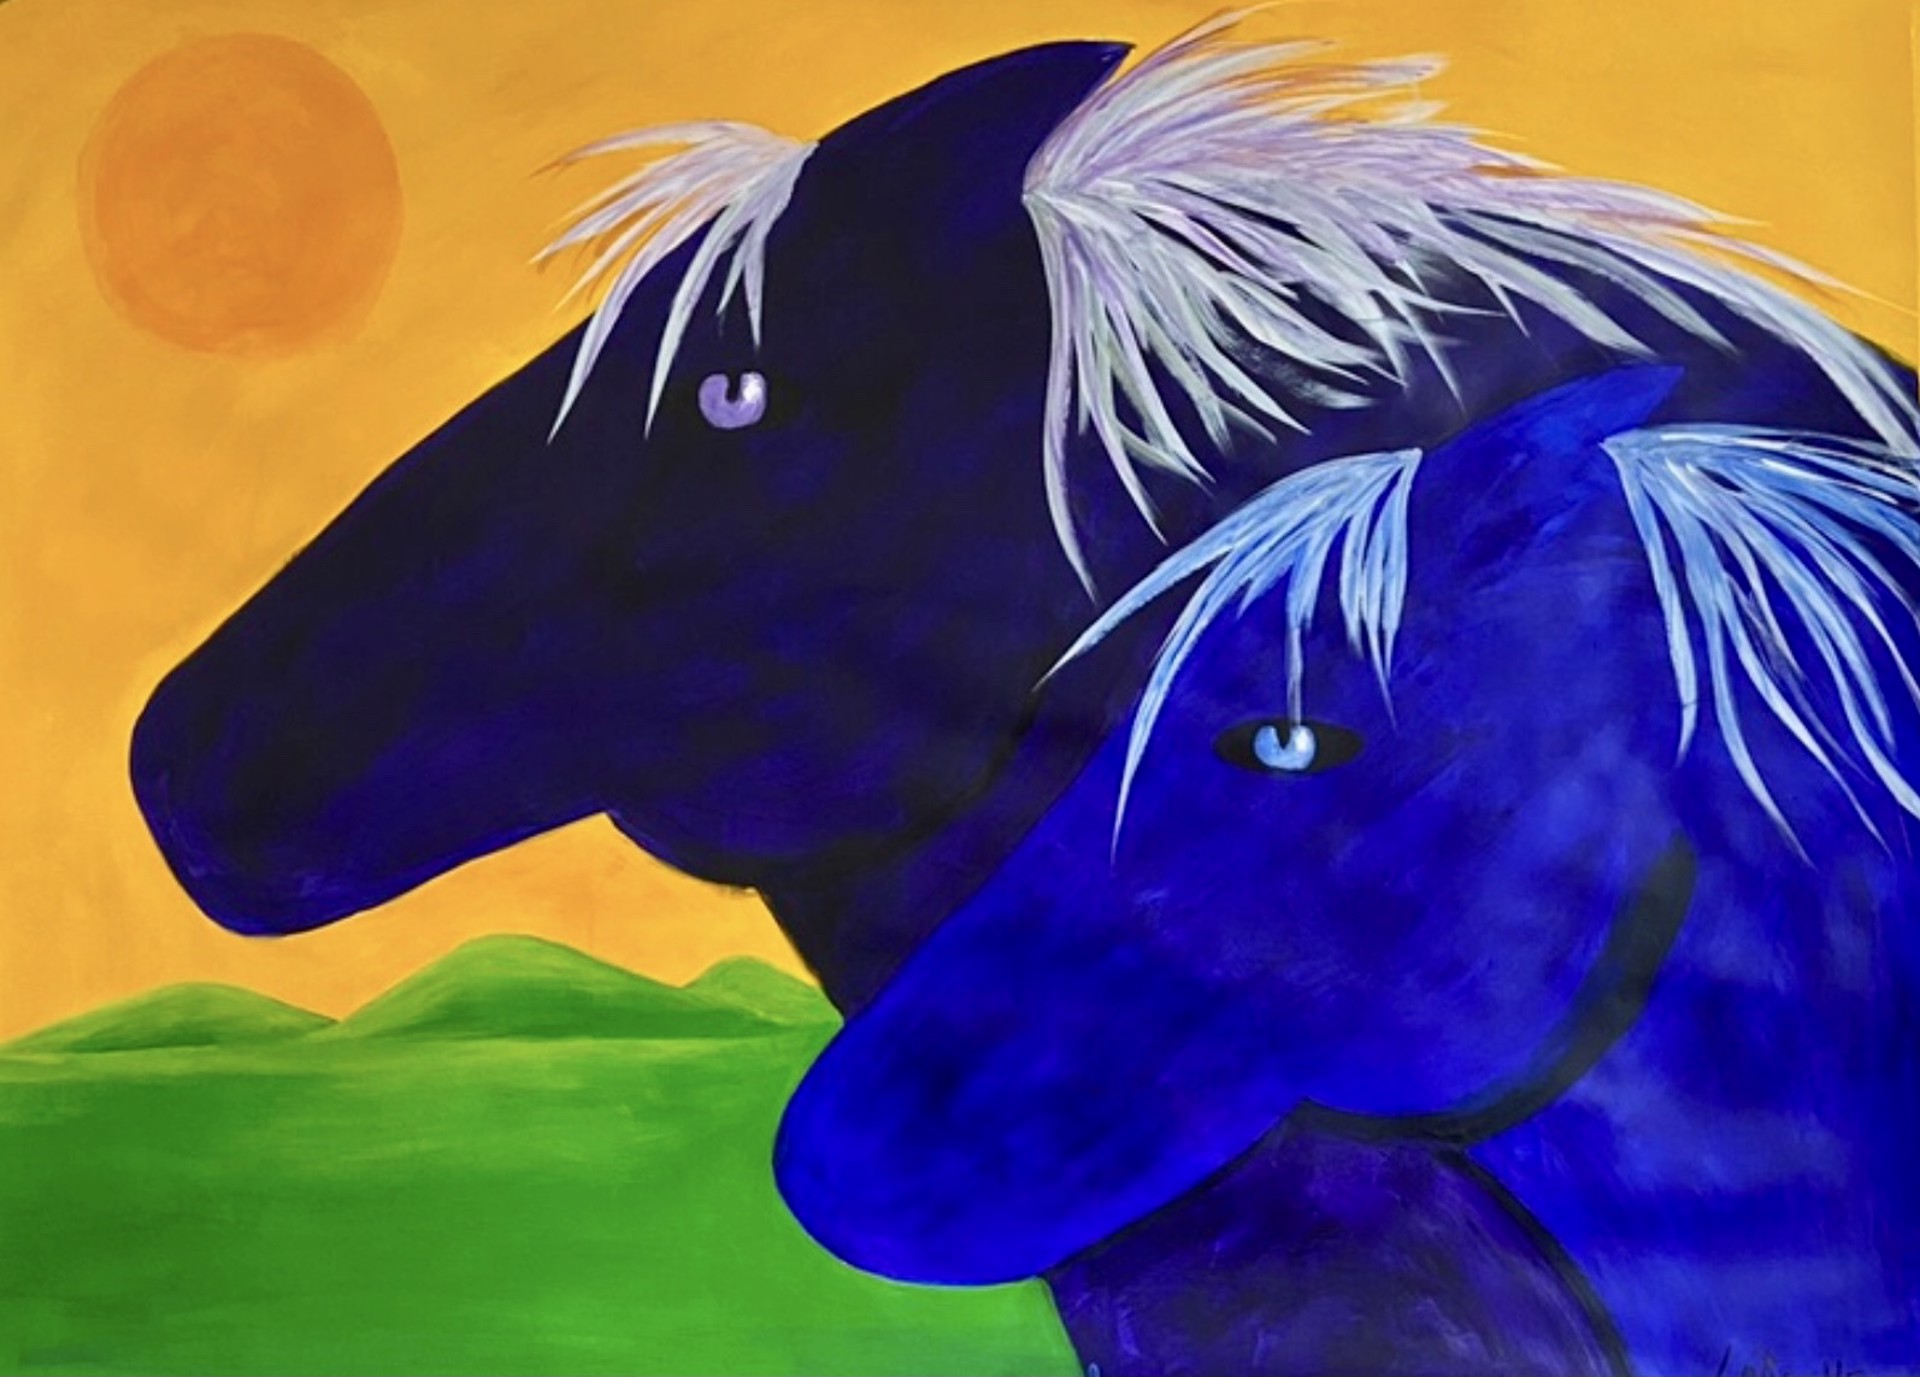 Orange Sky/Blue Horses by Carole LaRoche